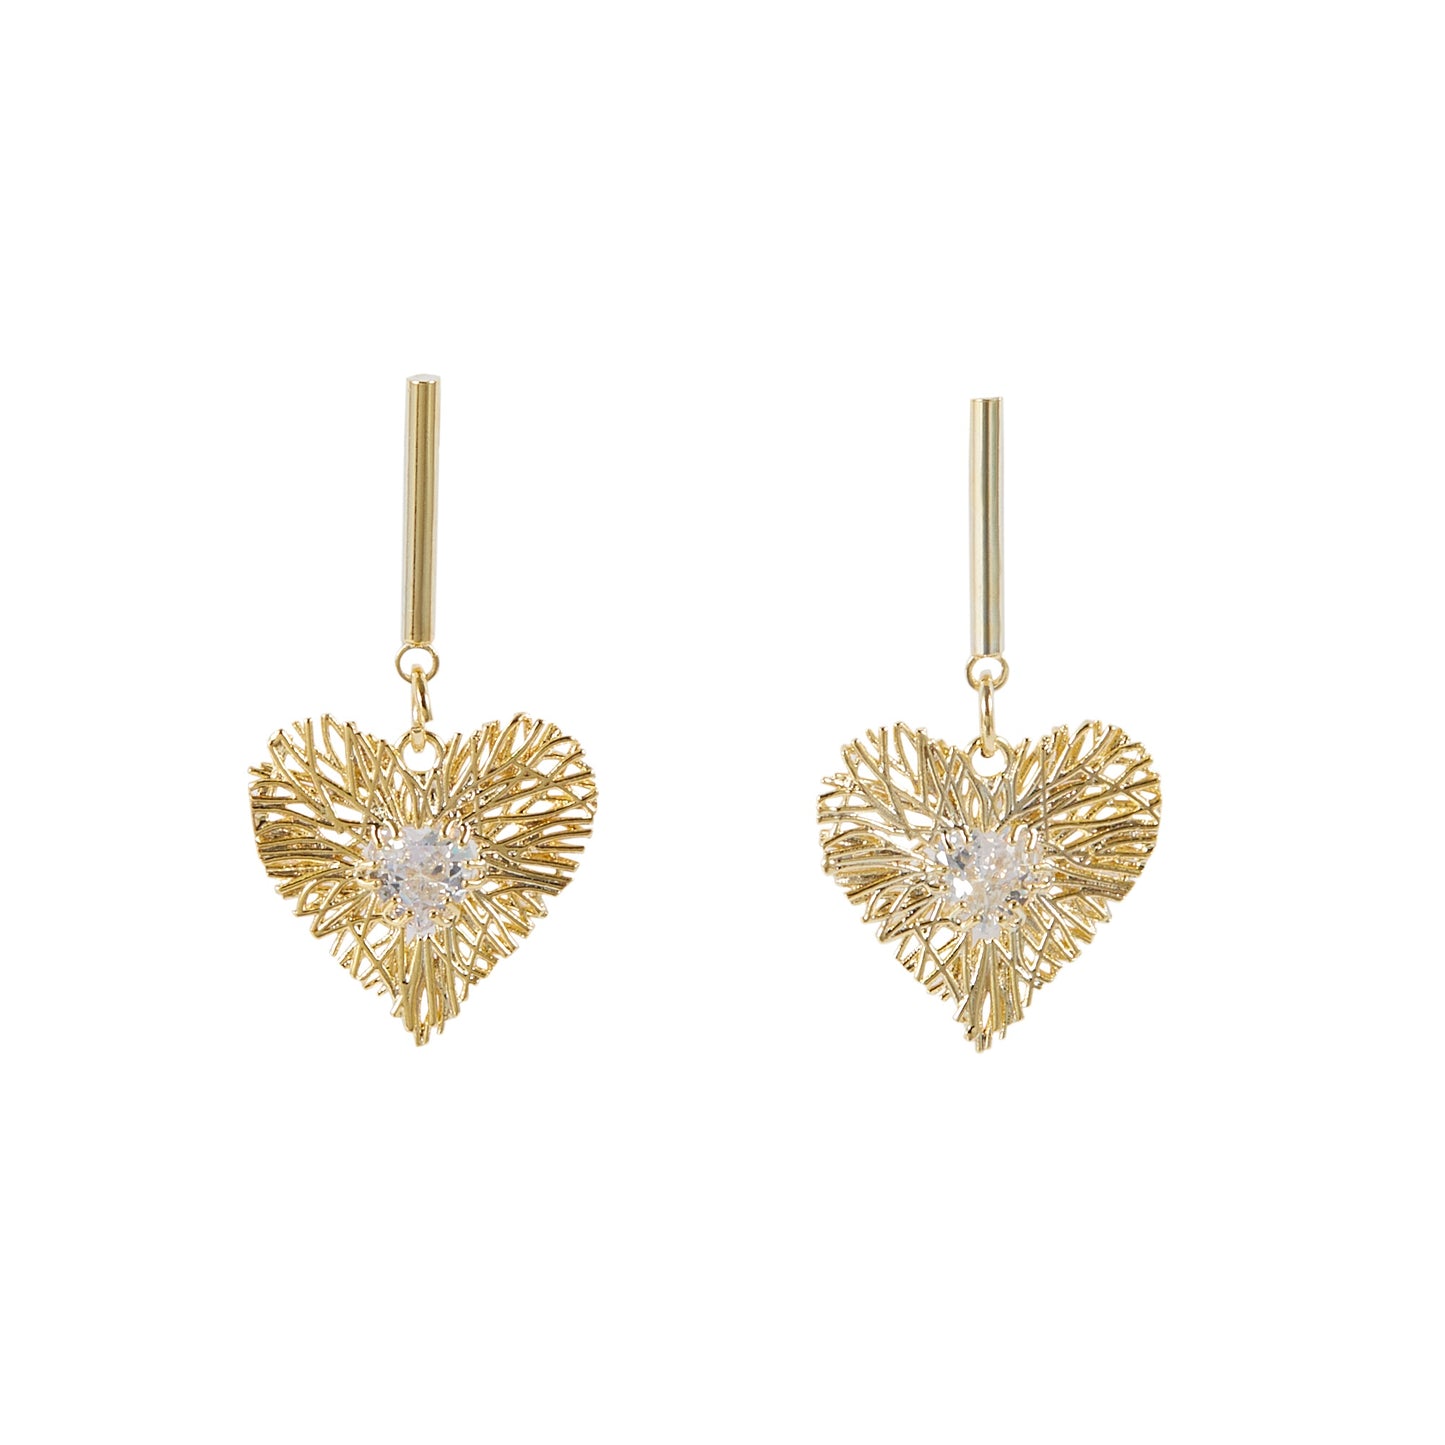 Cupid’s Charm Earrings Heart Shape 18k Gold Plated Fashion Jewelry